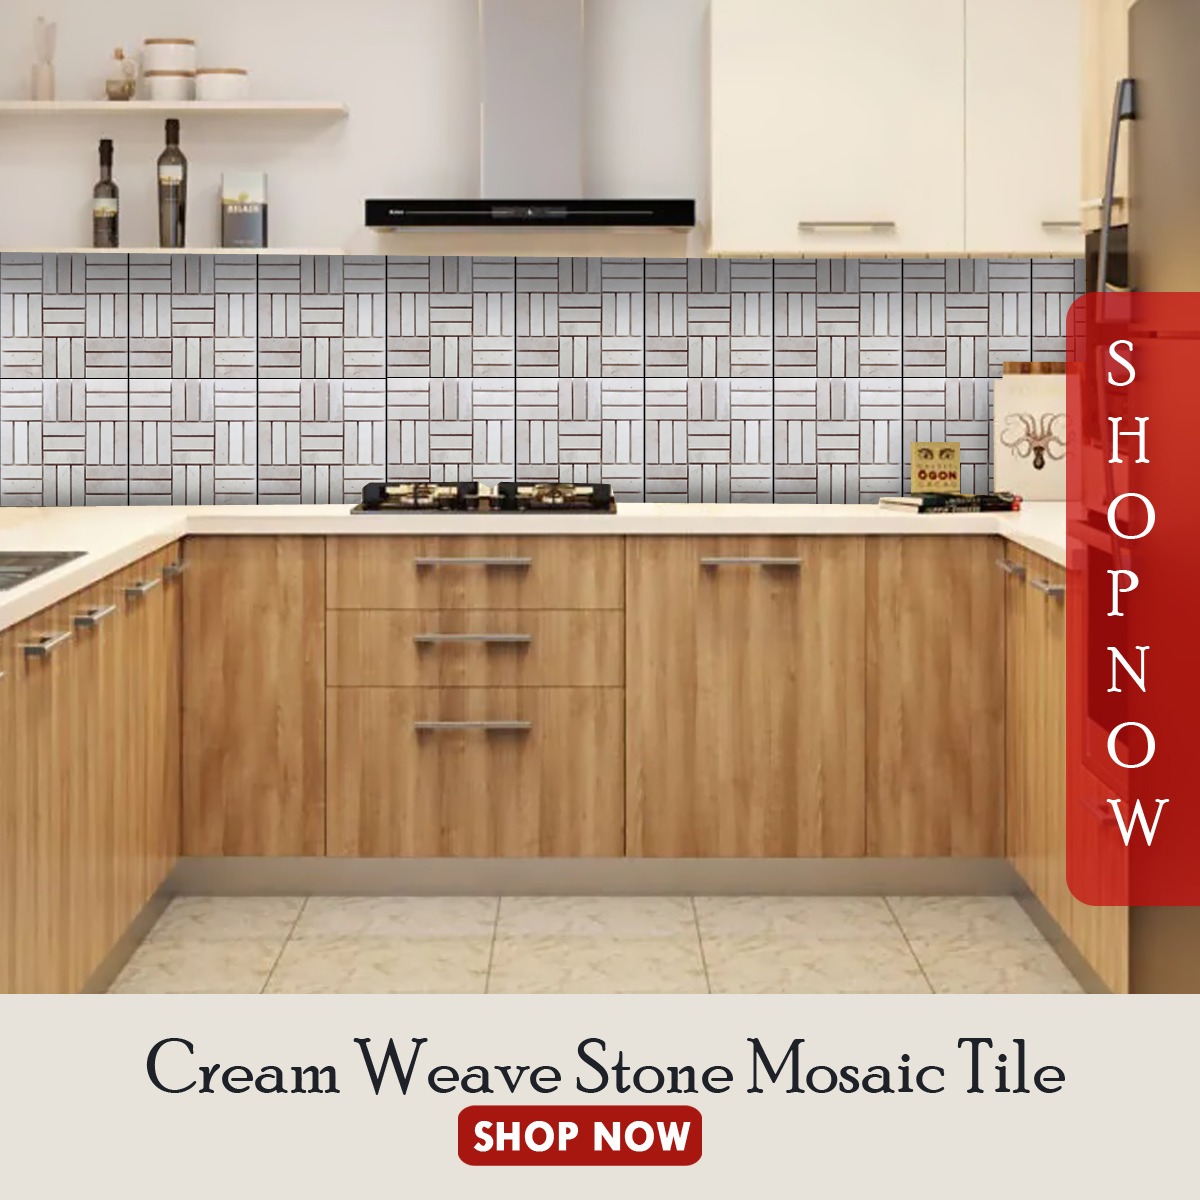 Cream Weave Stone Mosaic Tile